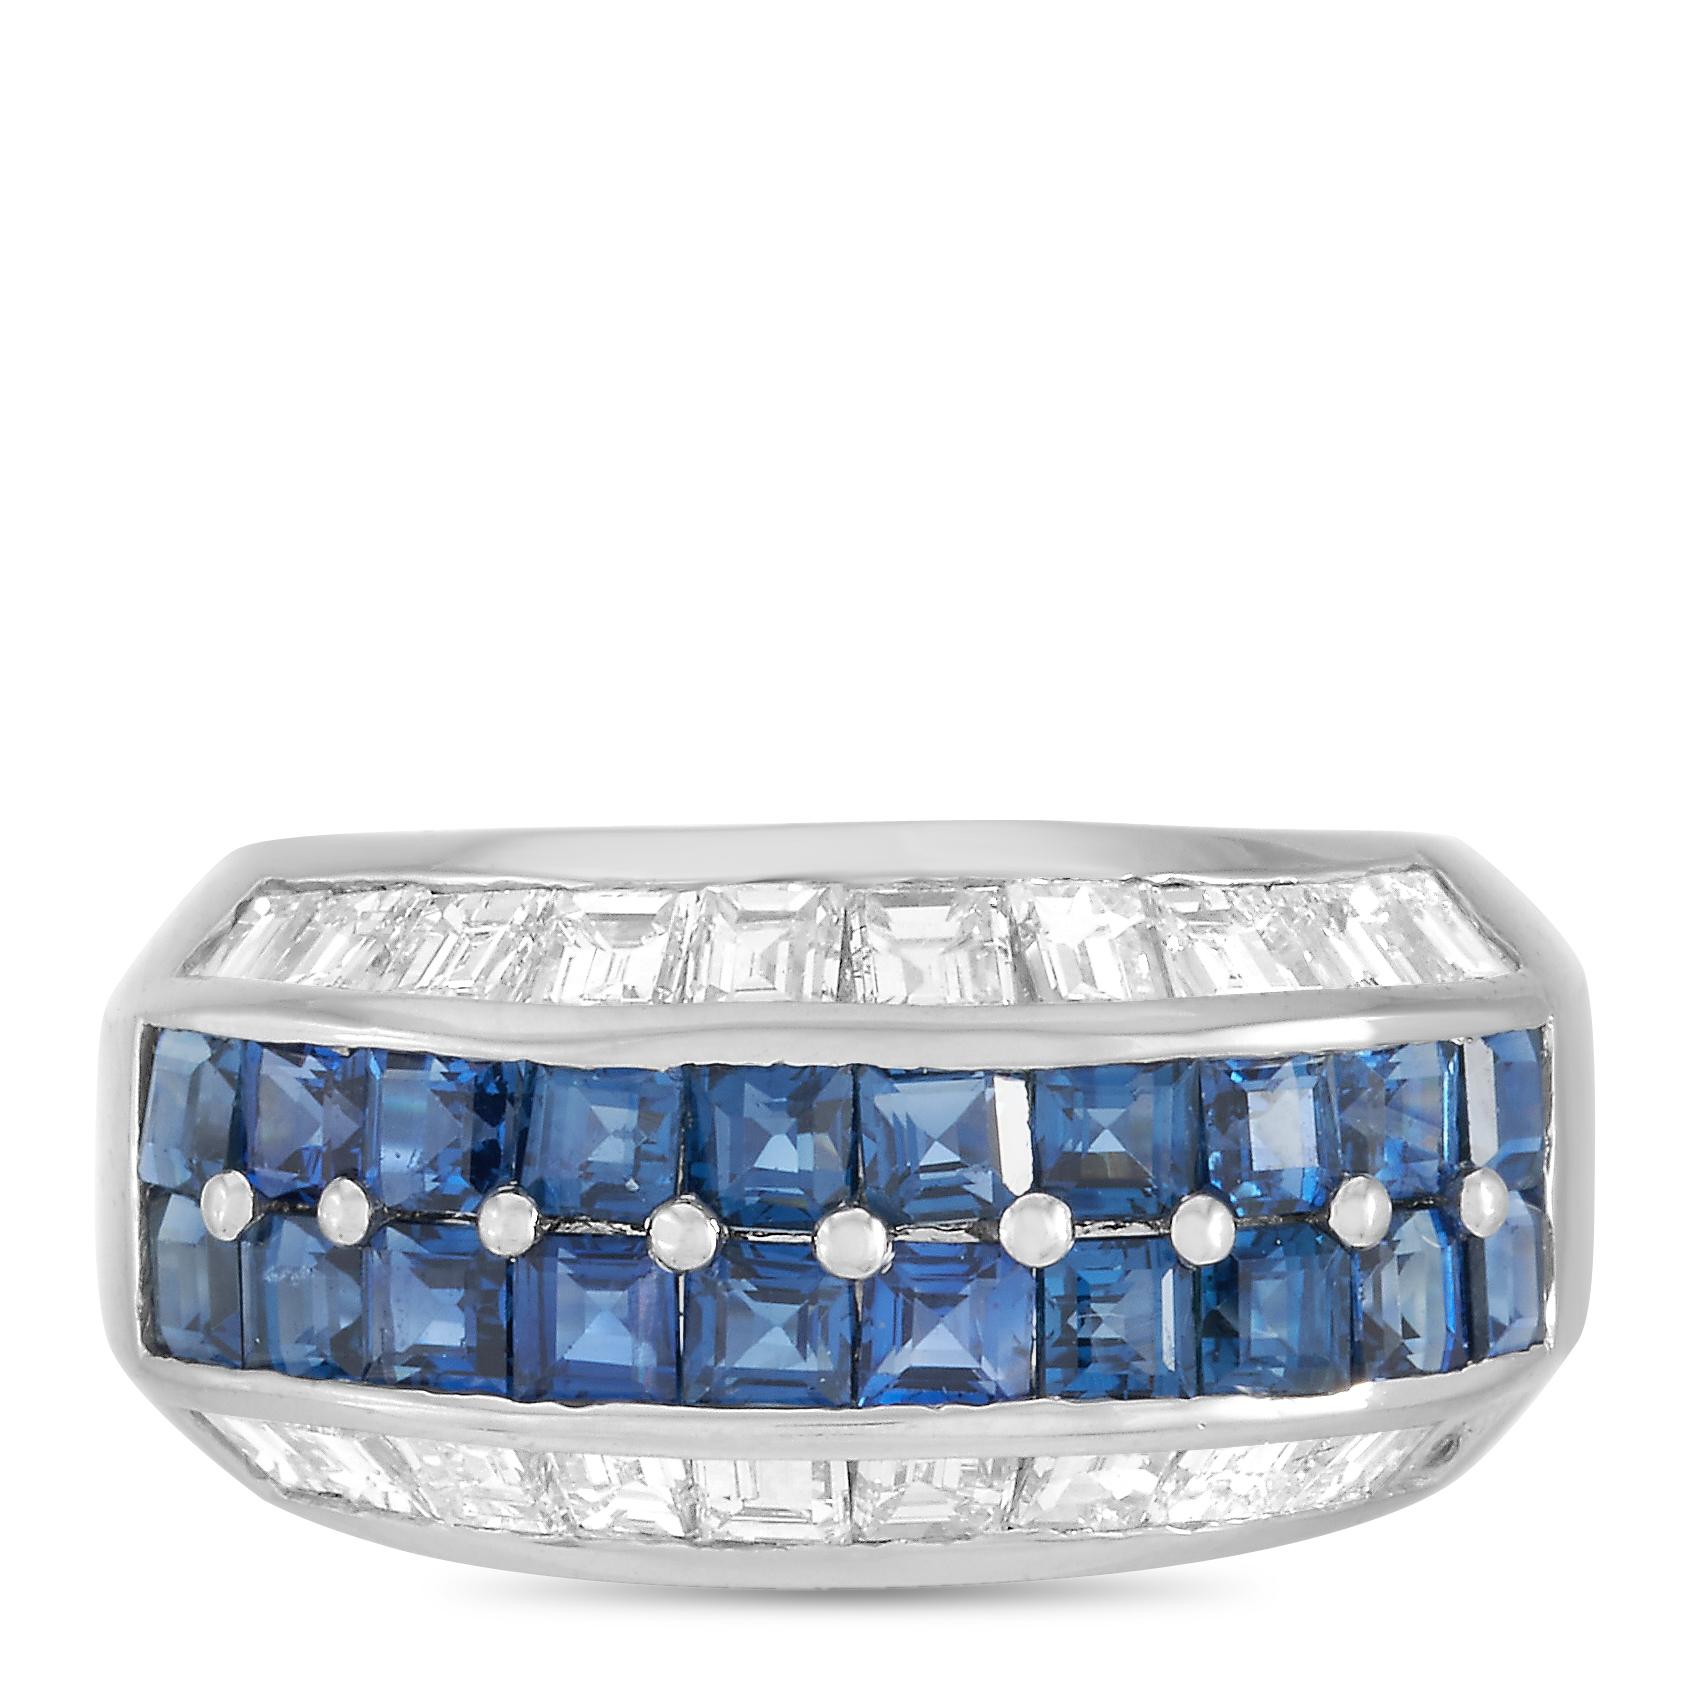 Women's Adler 18 Karat White Gold 1.76 Carat Diamond and Sapphire Ring